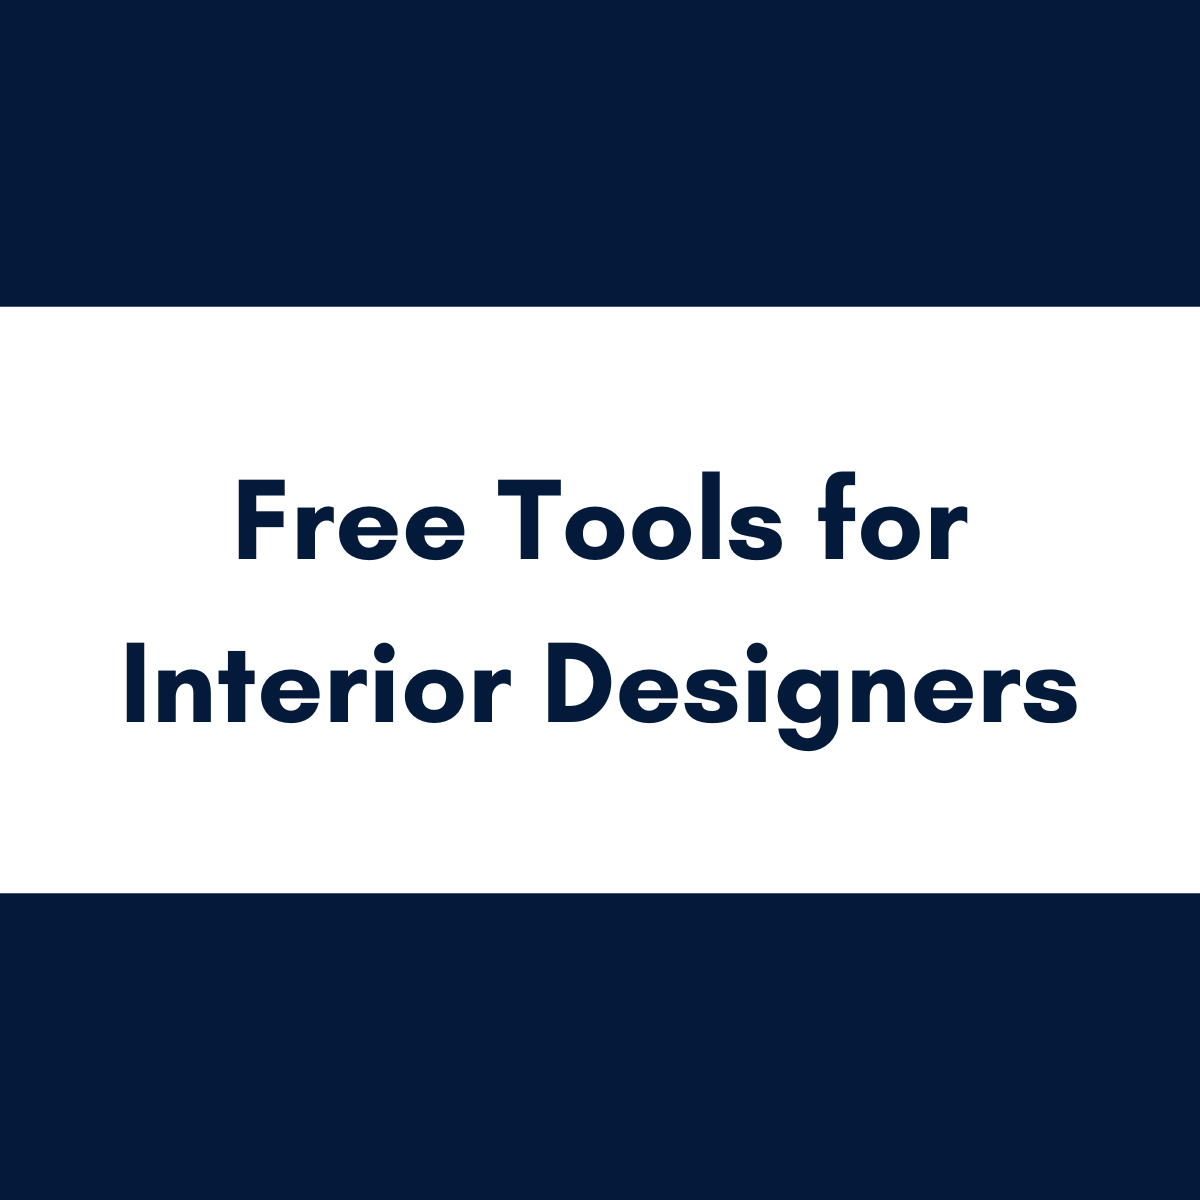 Free Tools for Interior Designers